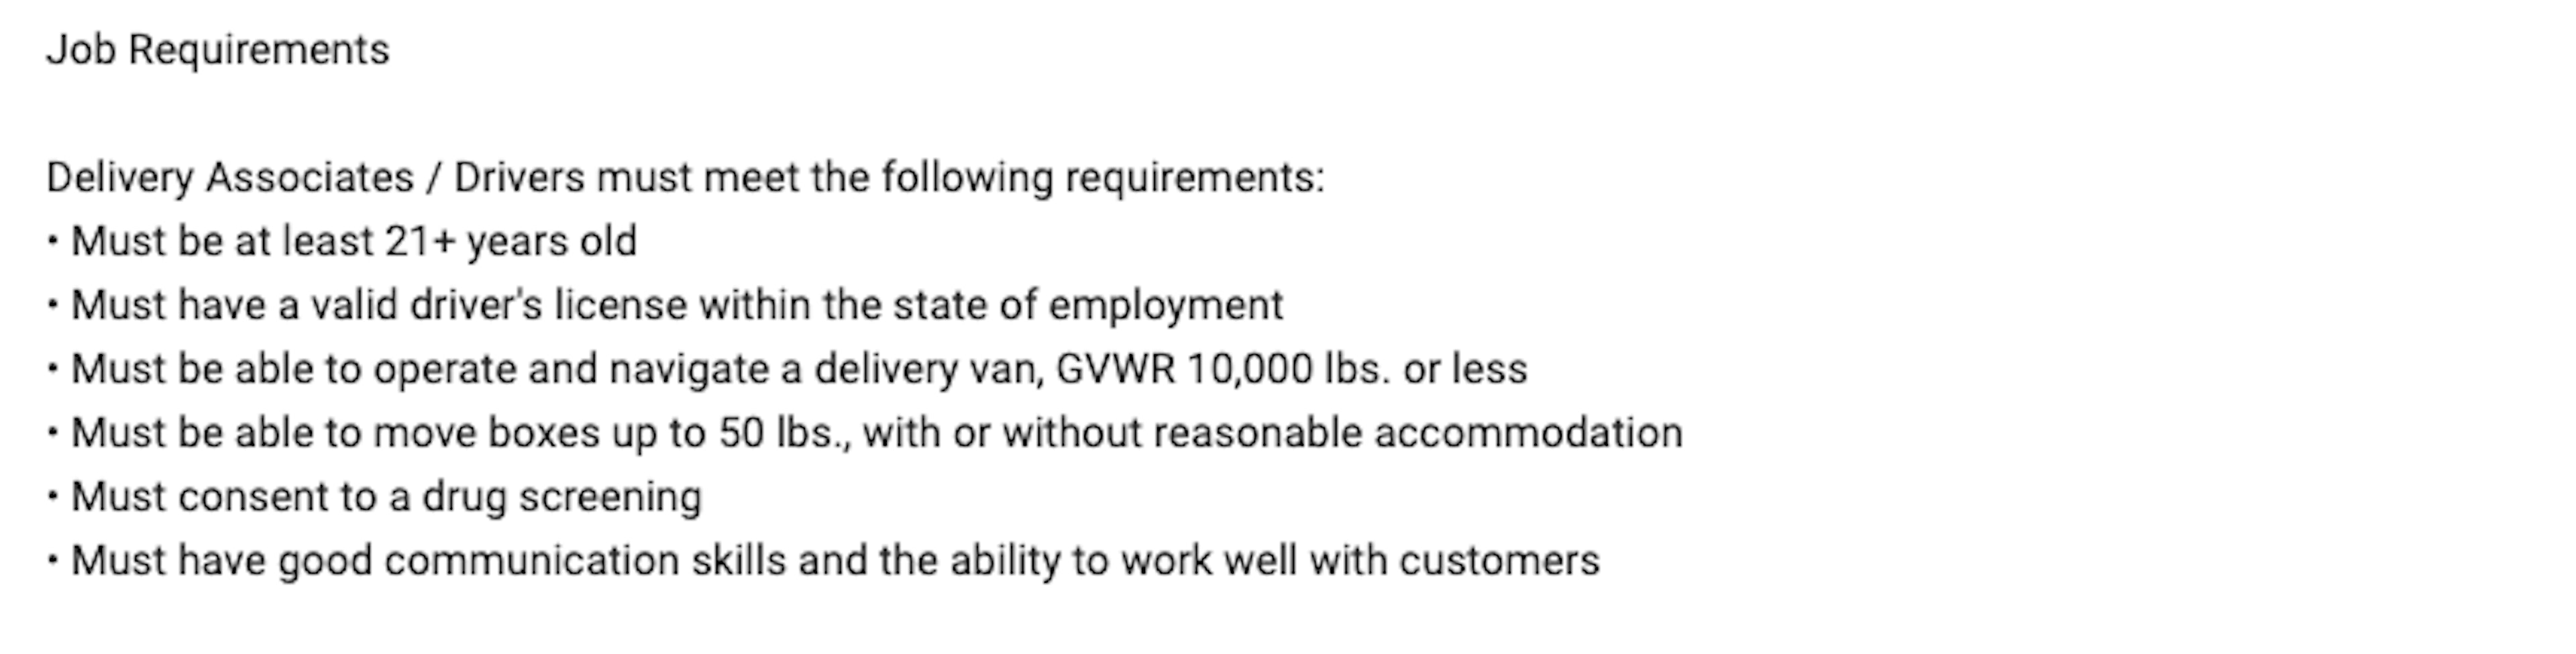 Amazon's job board listing covering job requirements.